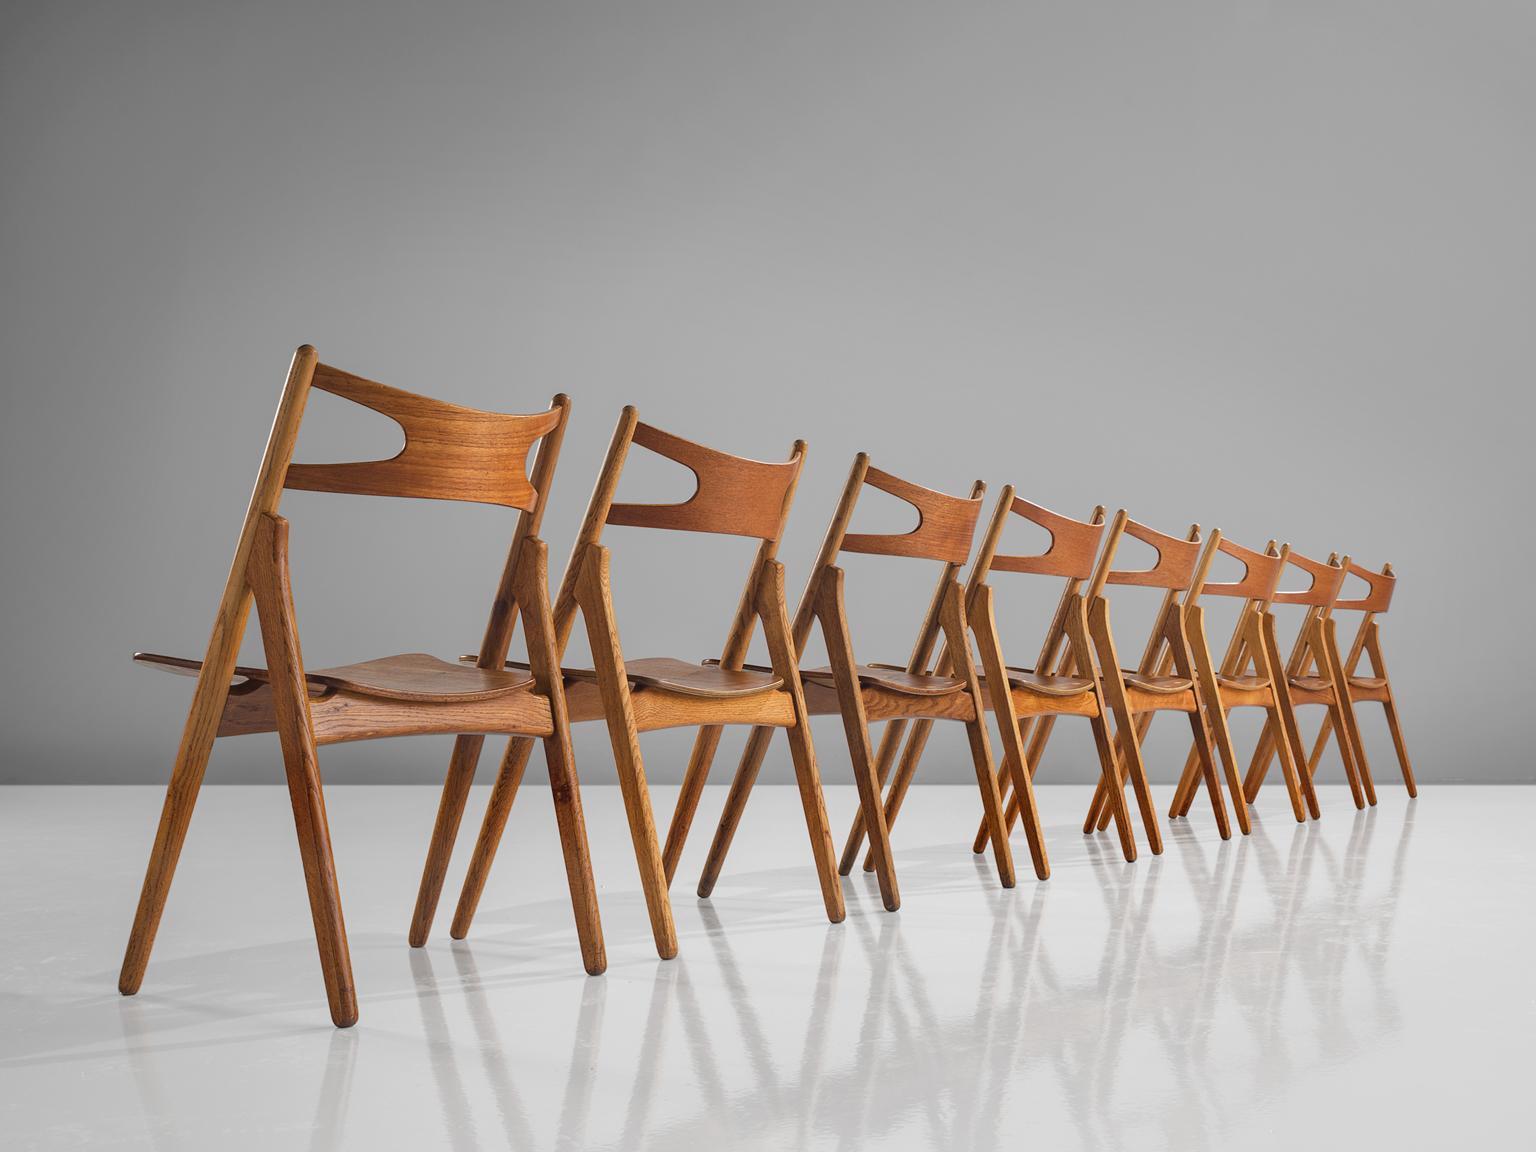 Hans J. Wegner for Carl Hansen & Søn, set of eight 'Sawbuck' CH29 chairs, oak, teak, Denmark, 1952.

This set of eight chairs is designed by Hans J. Wegner for Carl Hansen. This chair holds a very strong construction even though it has a simplistic